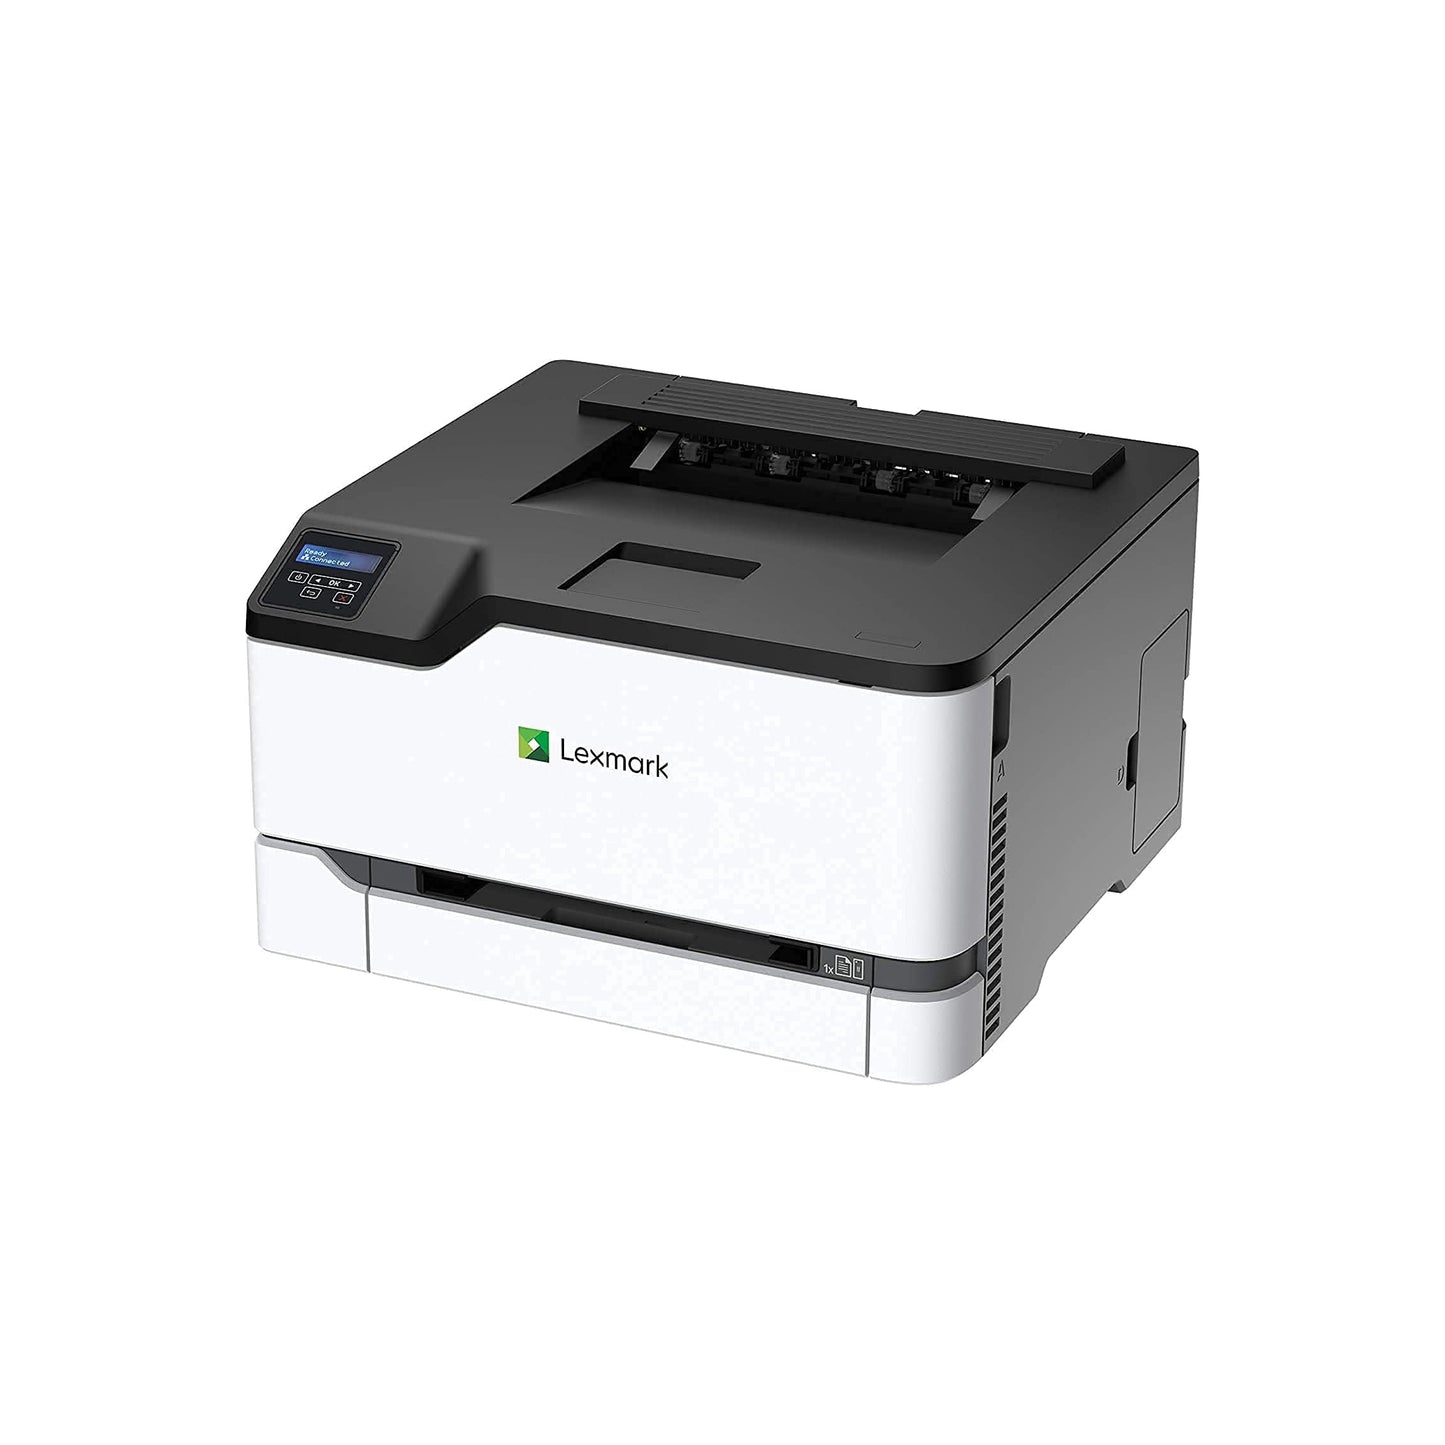 Lexmark Color Printer 3-series (C3326dw)